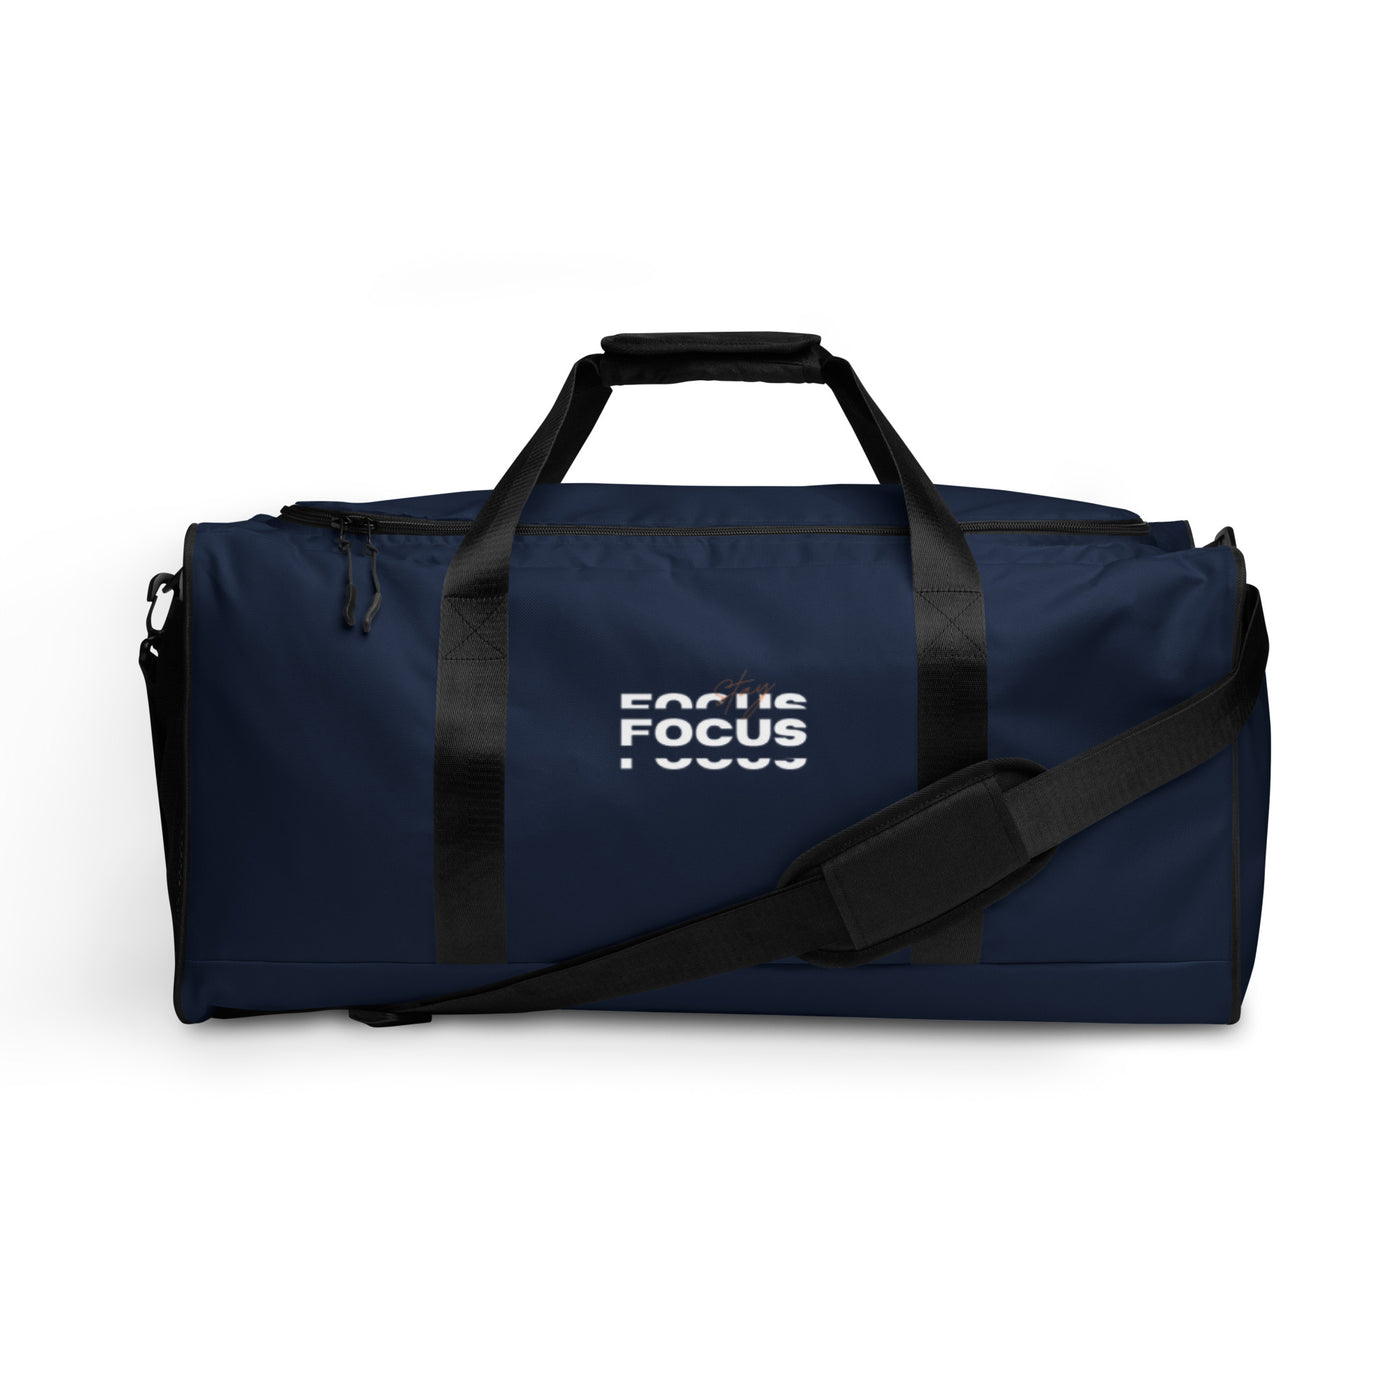 Navy Duffle Bag - Stay Focus